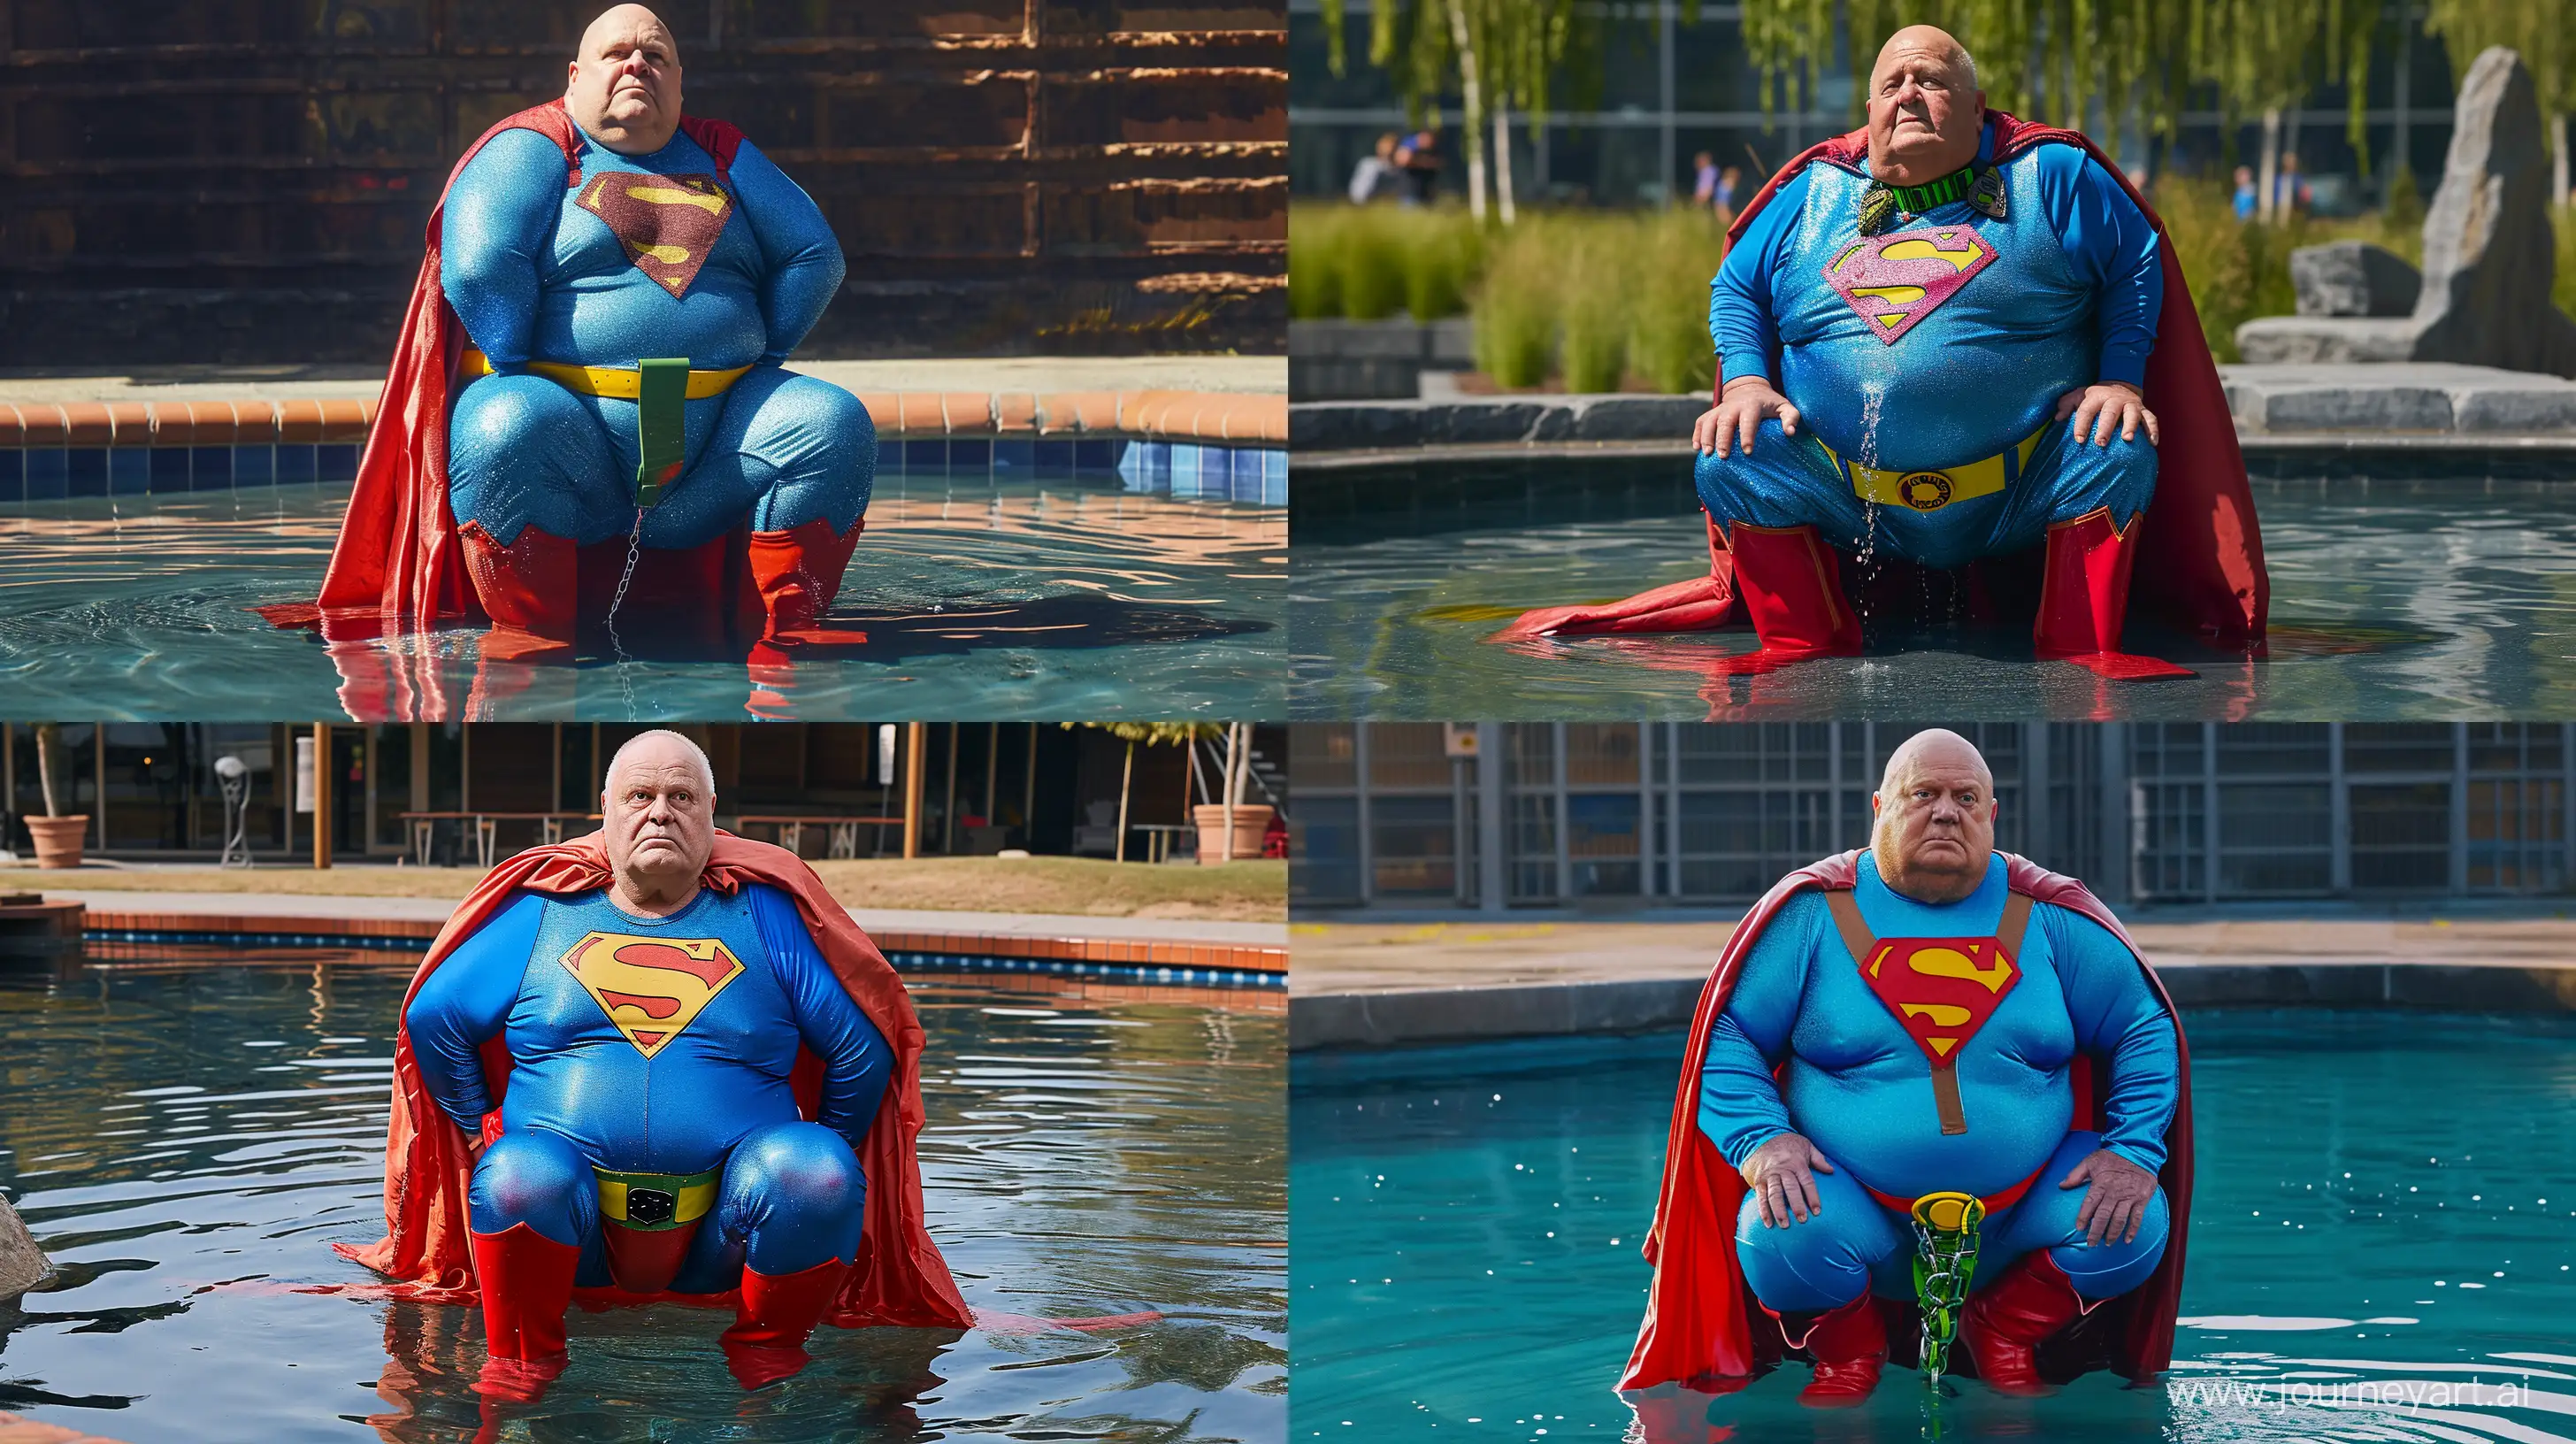 Elderly-Superman-Enjoys-Playful-Water-Adventure-in-Colorful-Costume